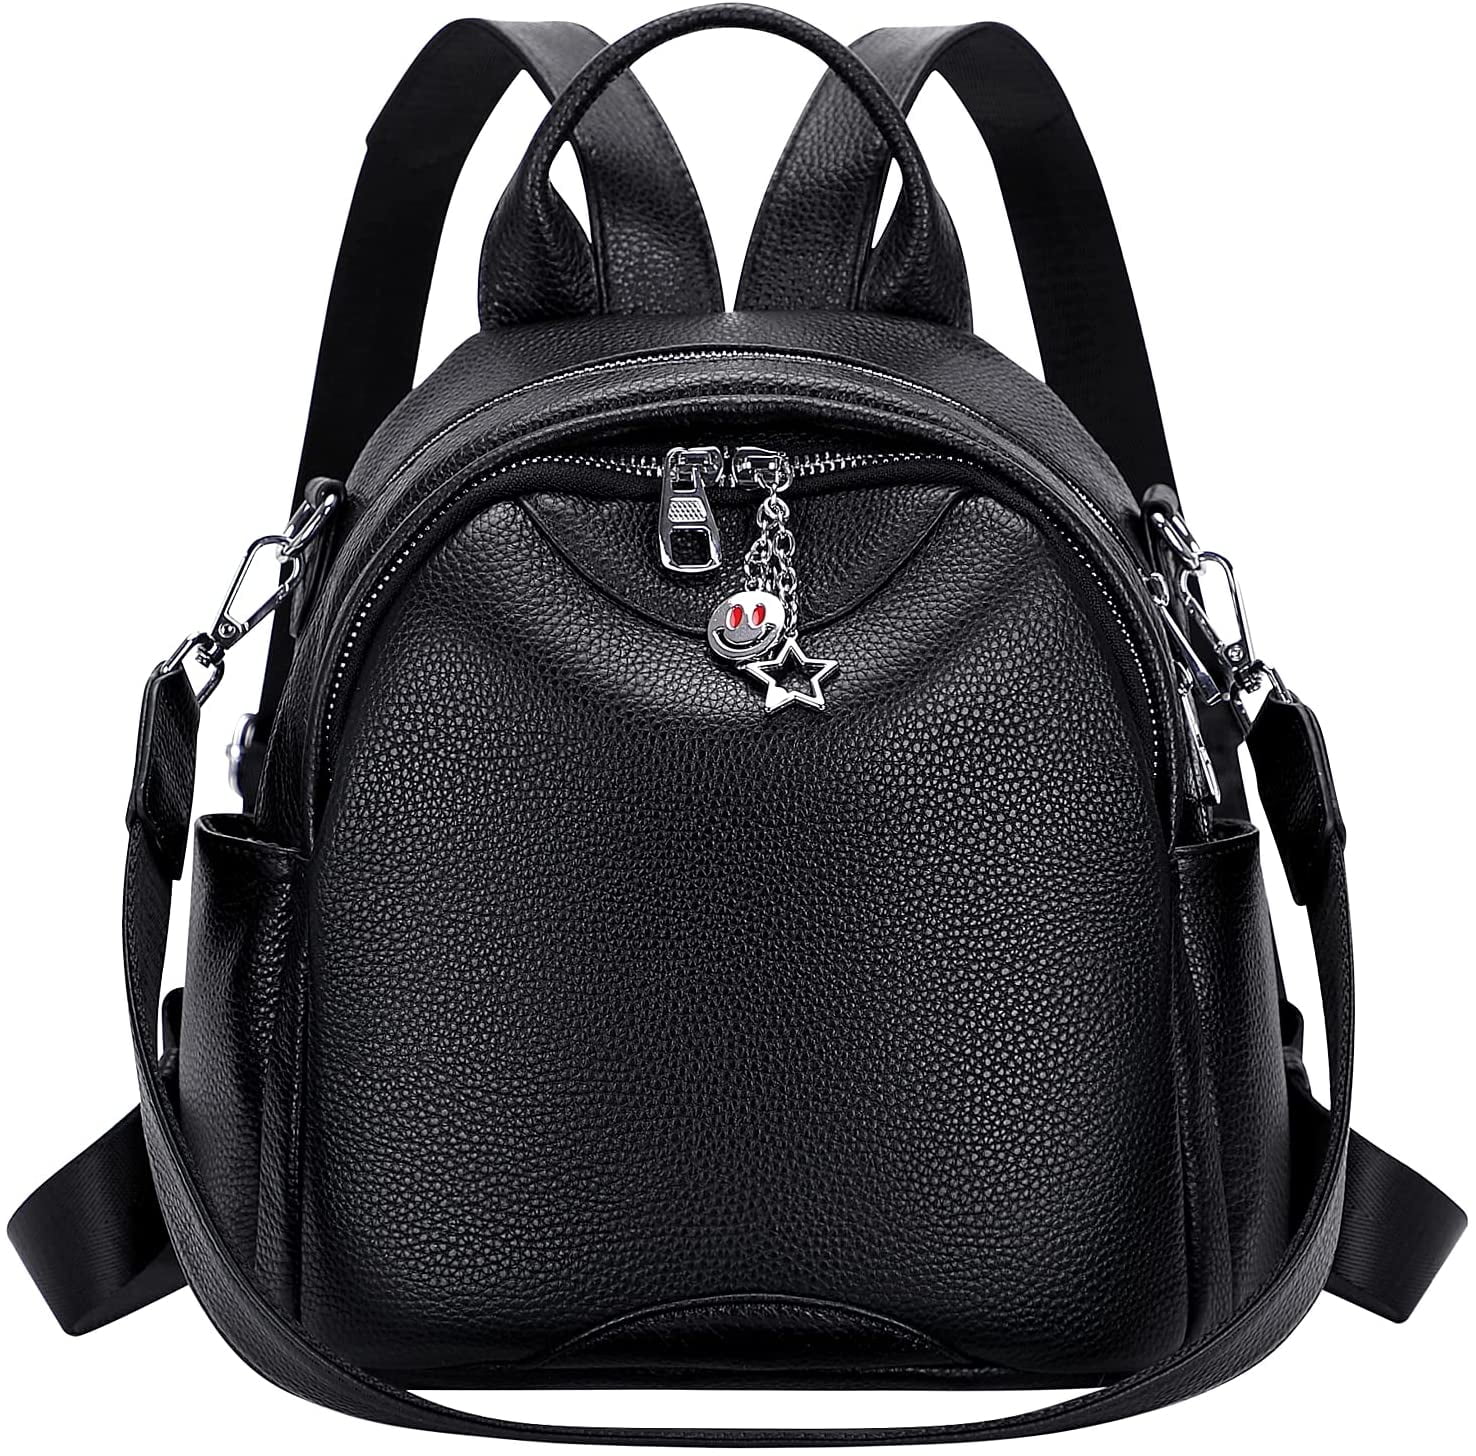 ALTOSY Women Real Leather Backpack Fashion Ladies Rucksack Shoulder Bag College Daypack 